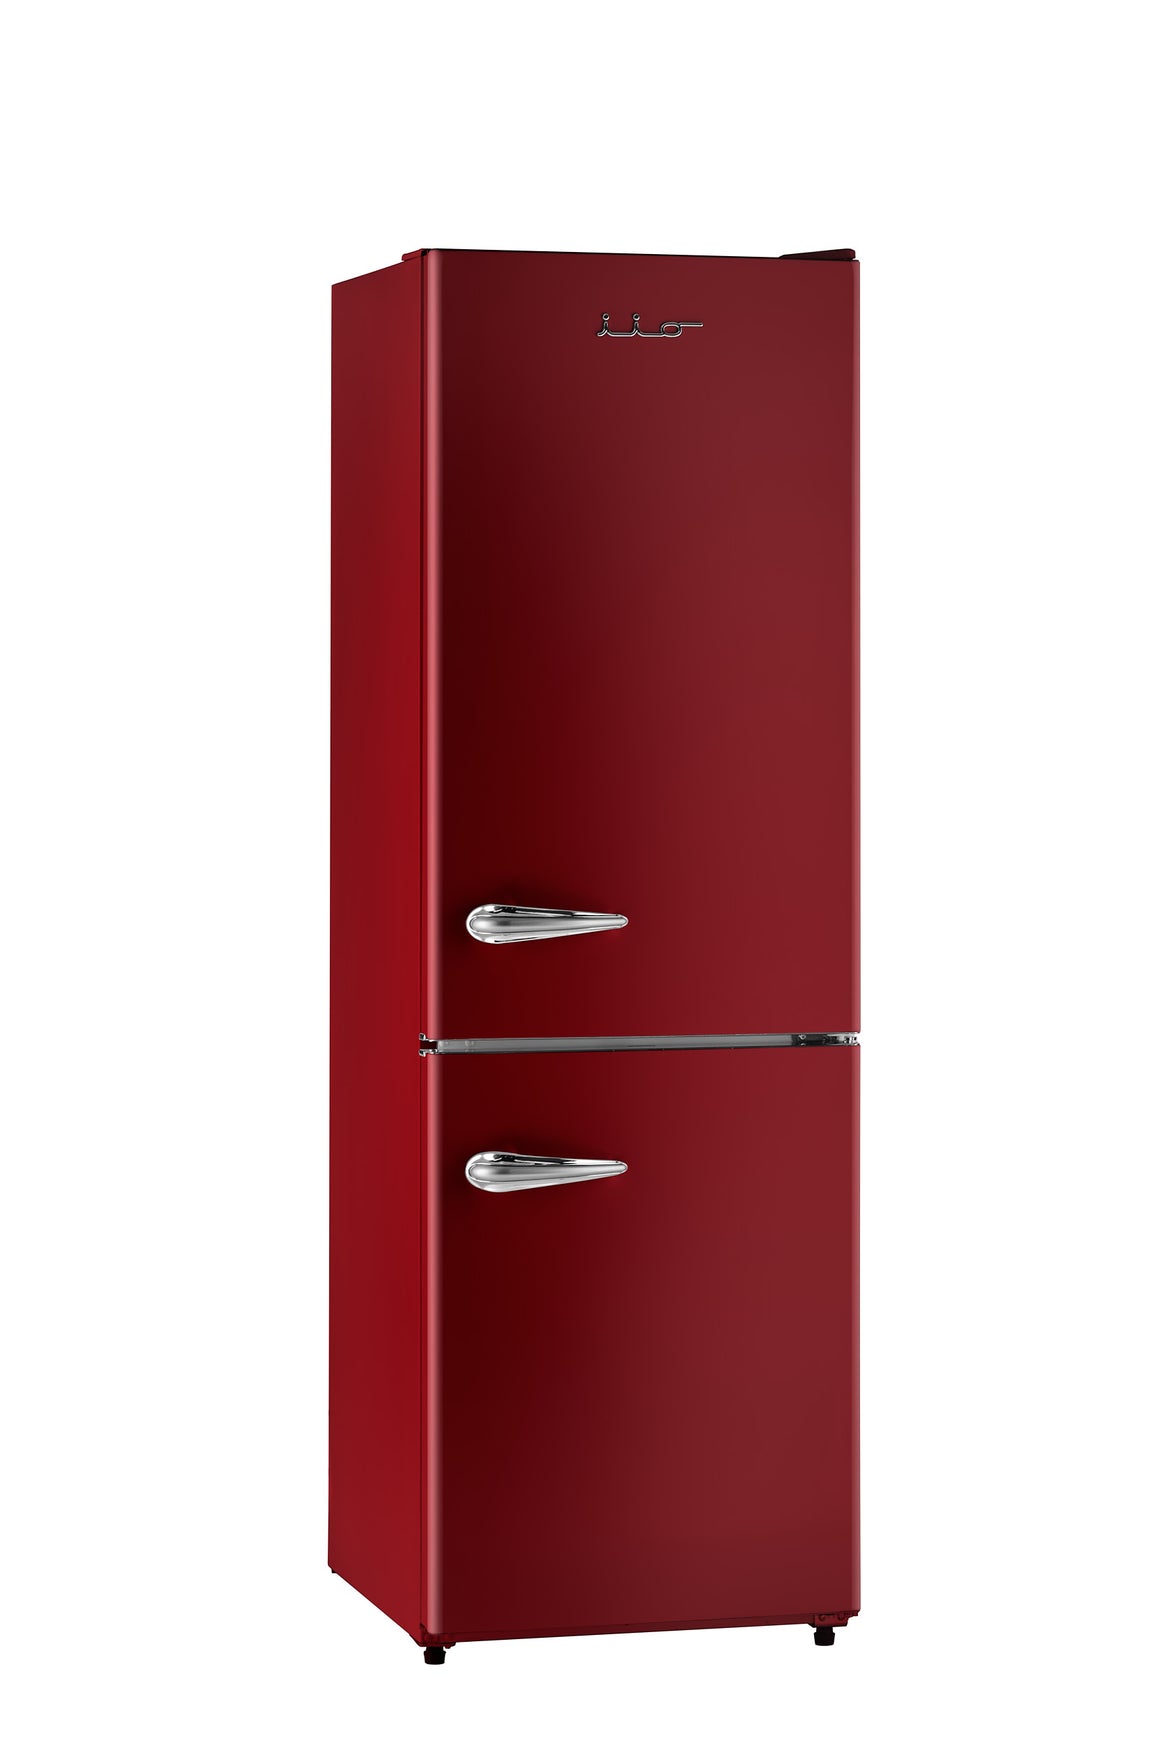 iio 11 Cu. Ft. Retro Refrigerator with Bottom Freezer in Red (Right Hinge)